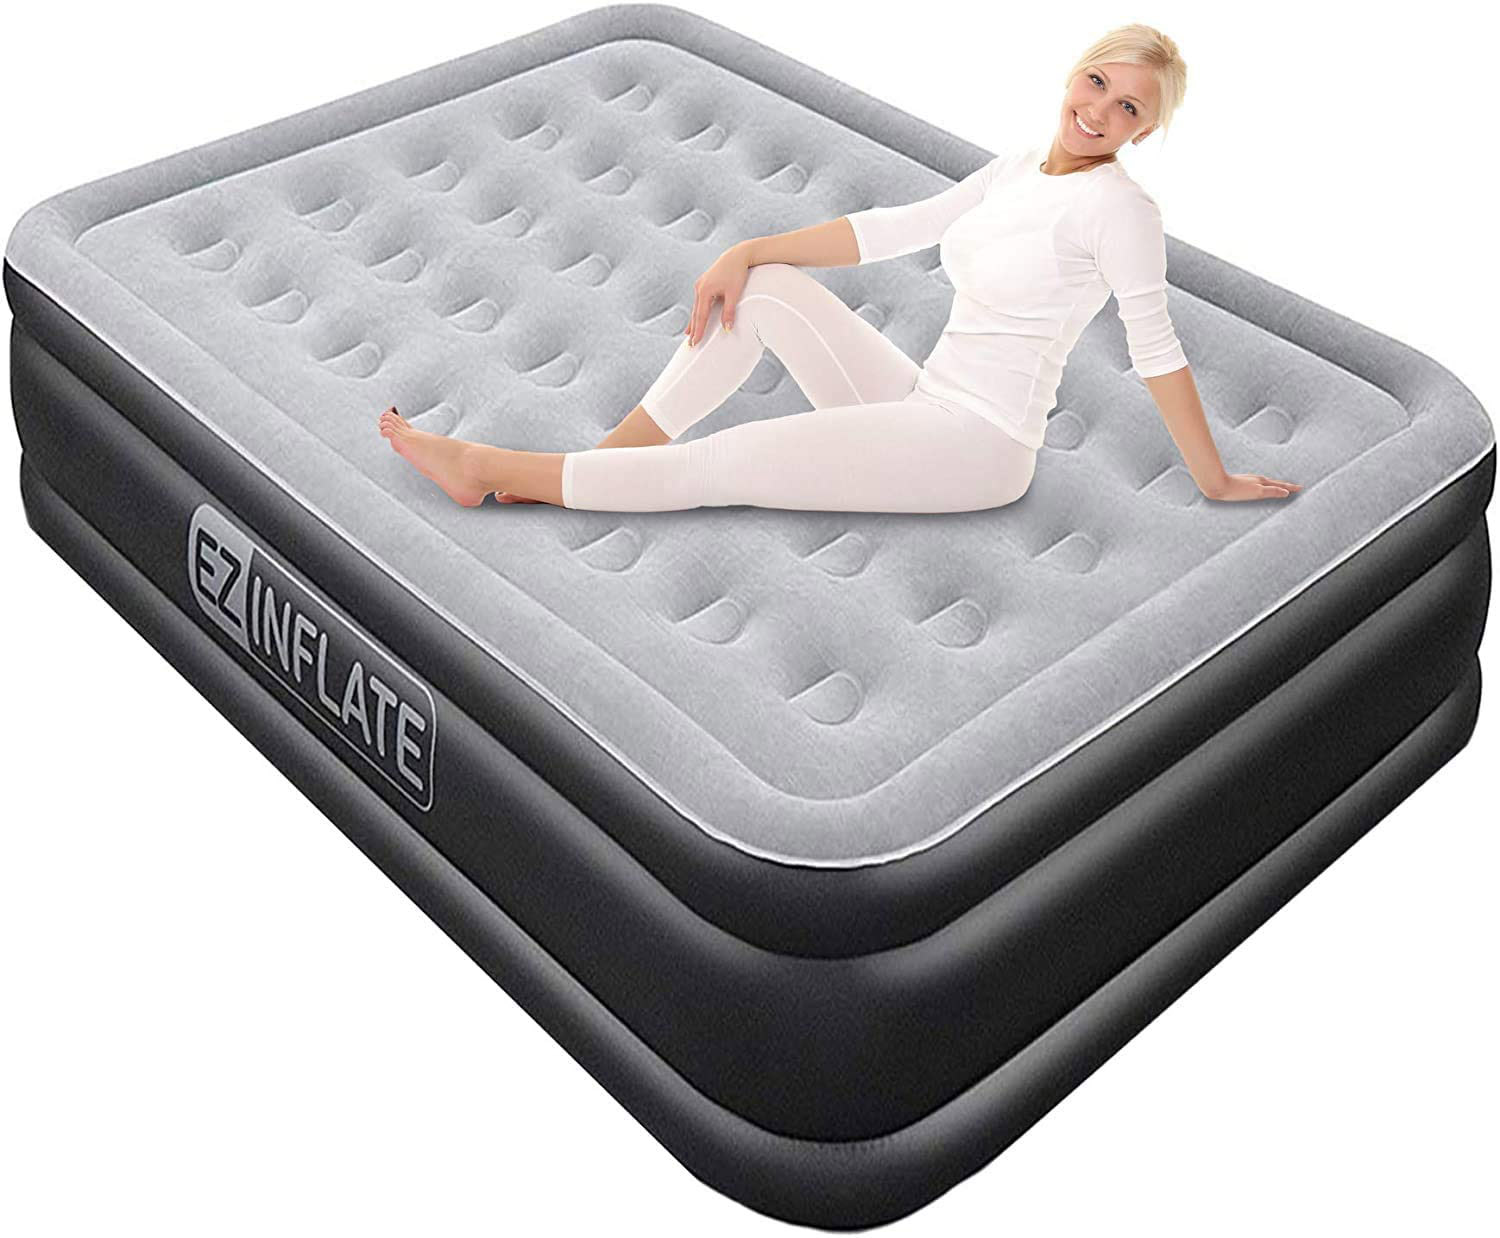 air mattress while camping reddit